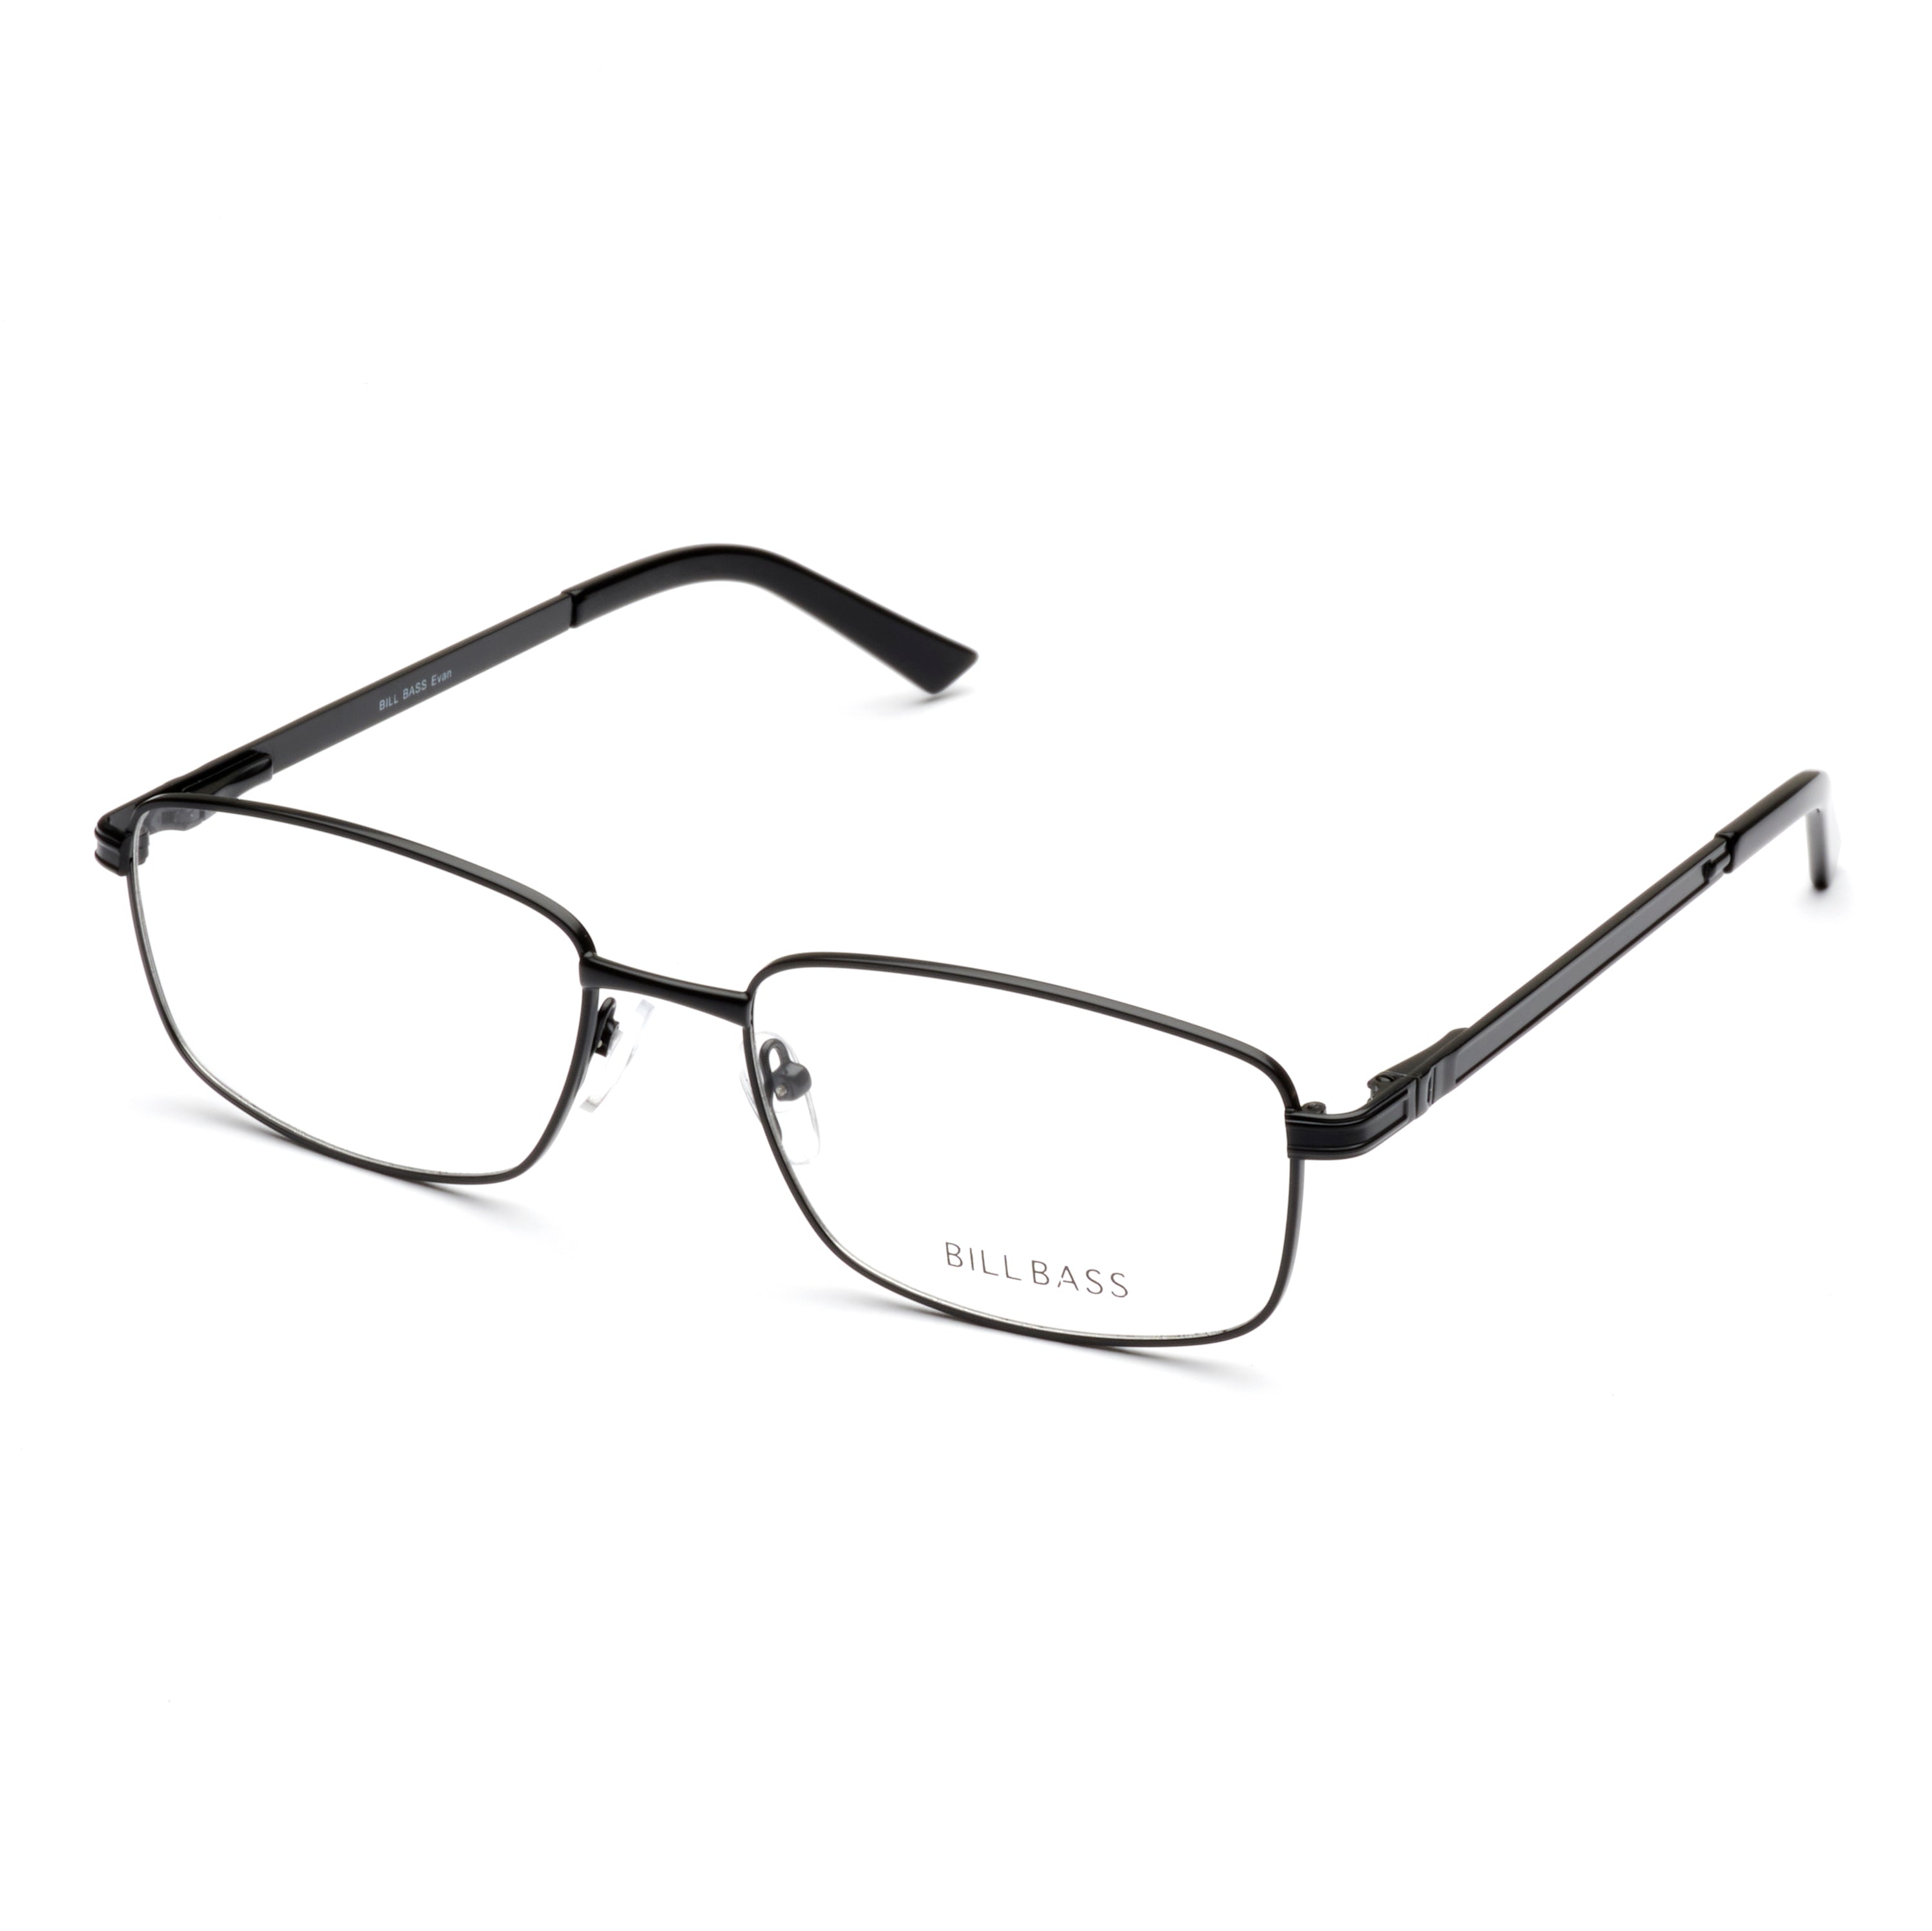 Bill Bass Evan Mens Prescription Glasses | Bupa Optical